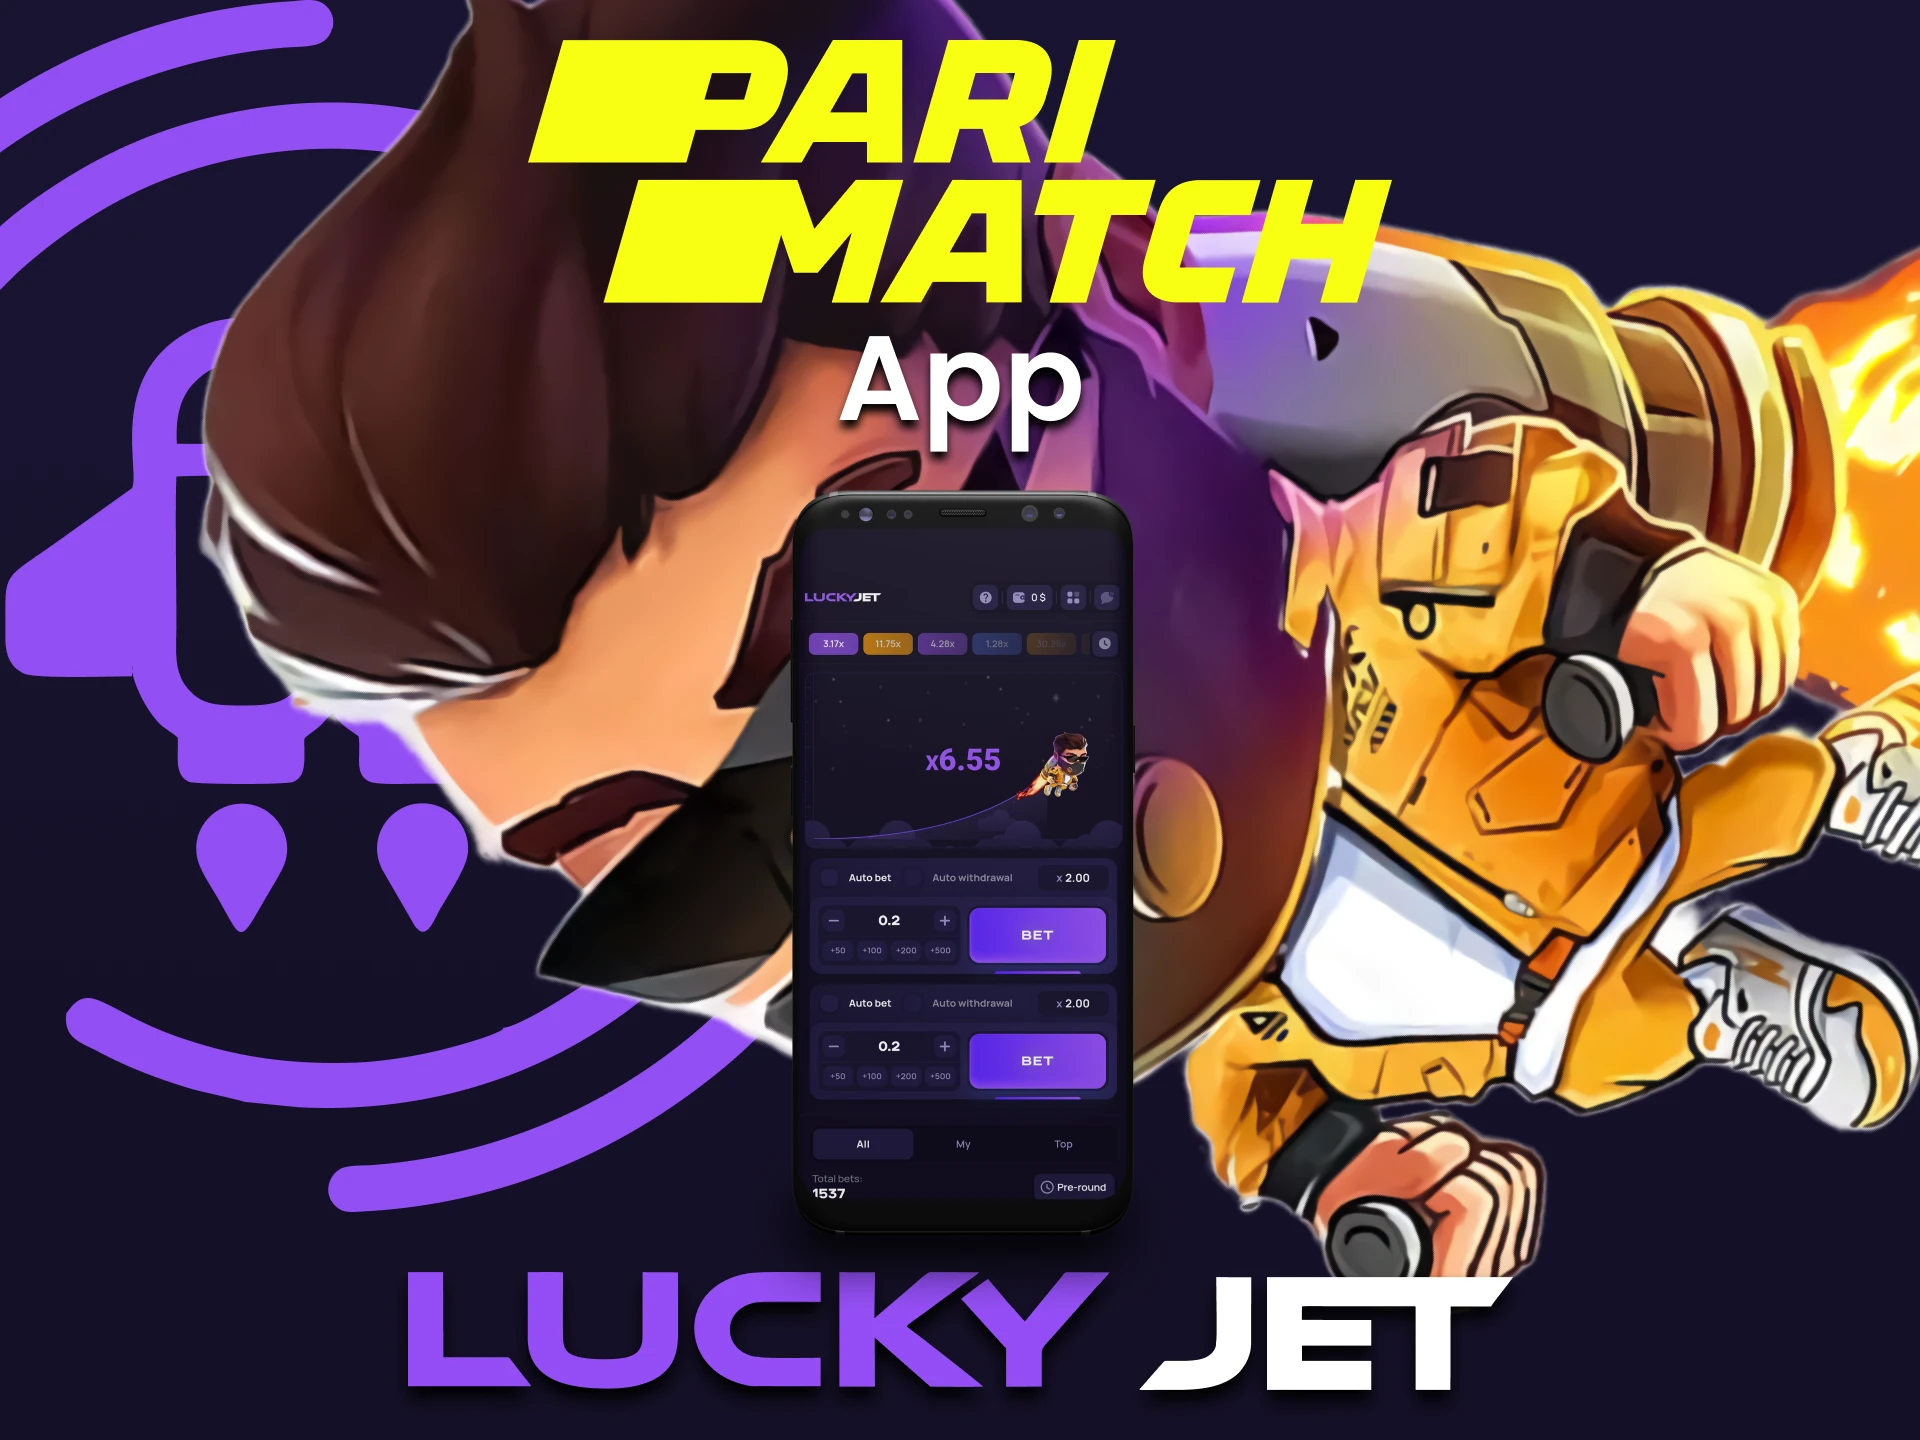 Play Lucky Jet through the Parimatch app.